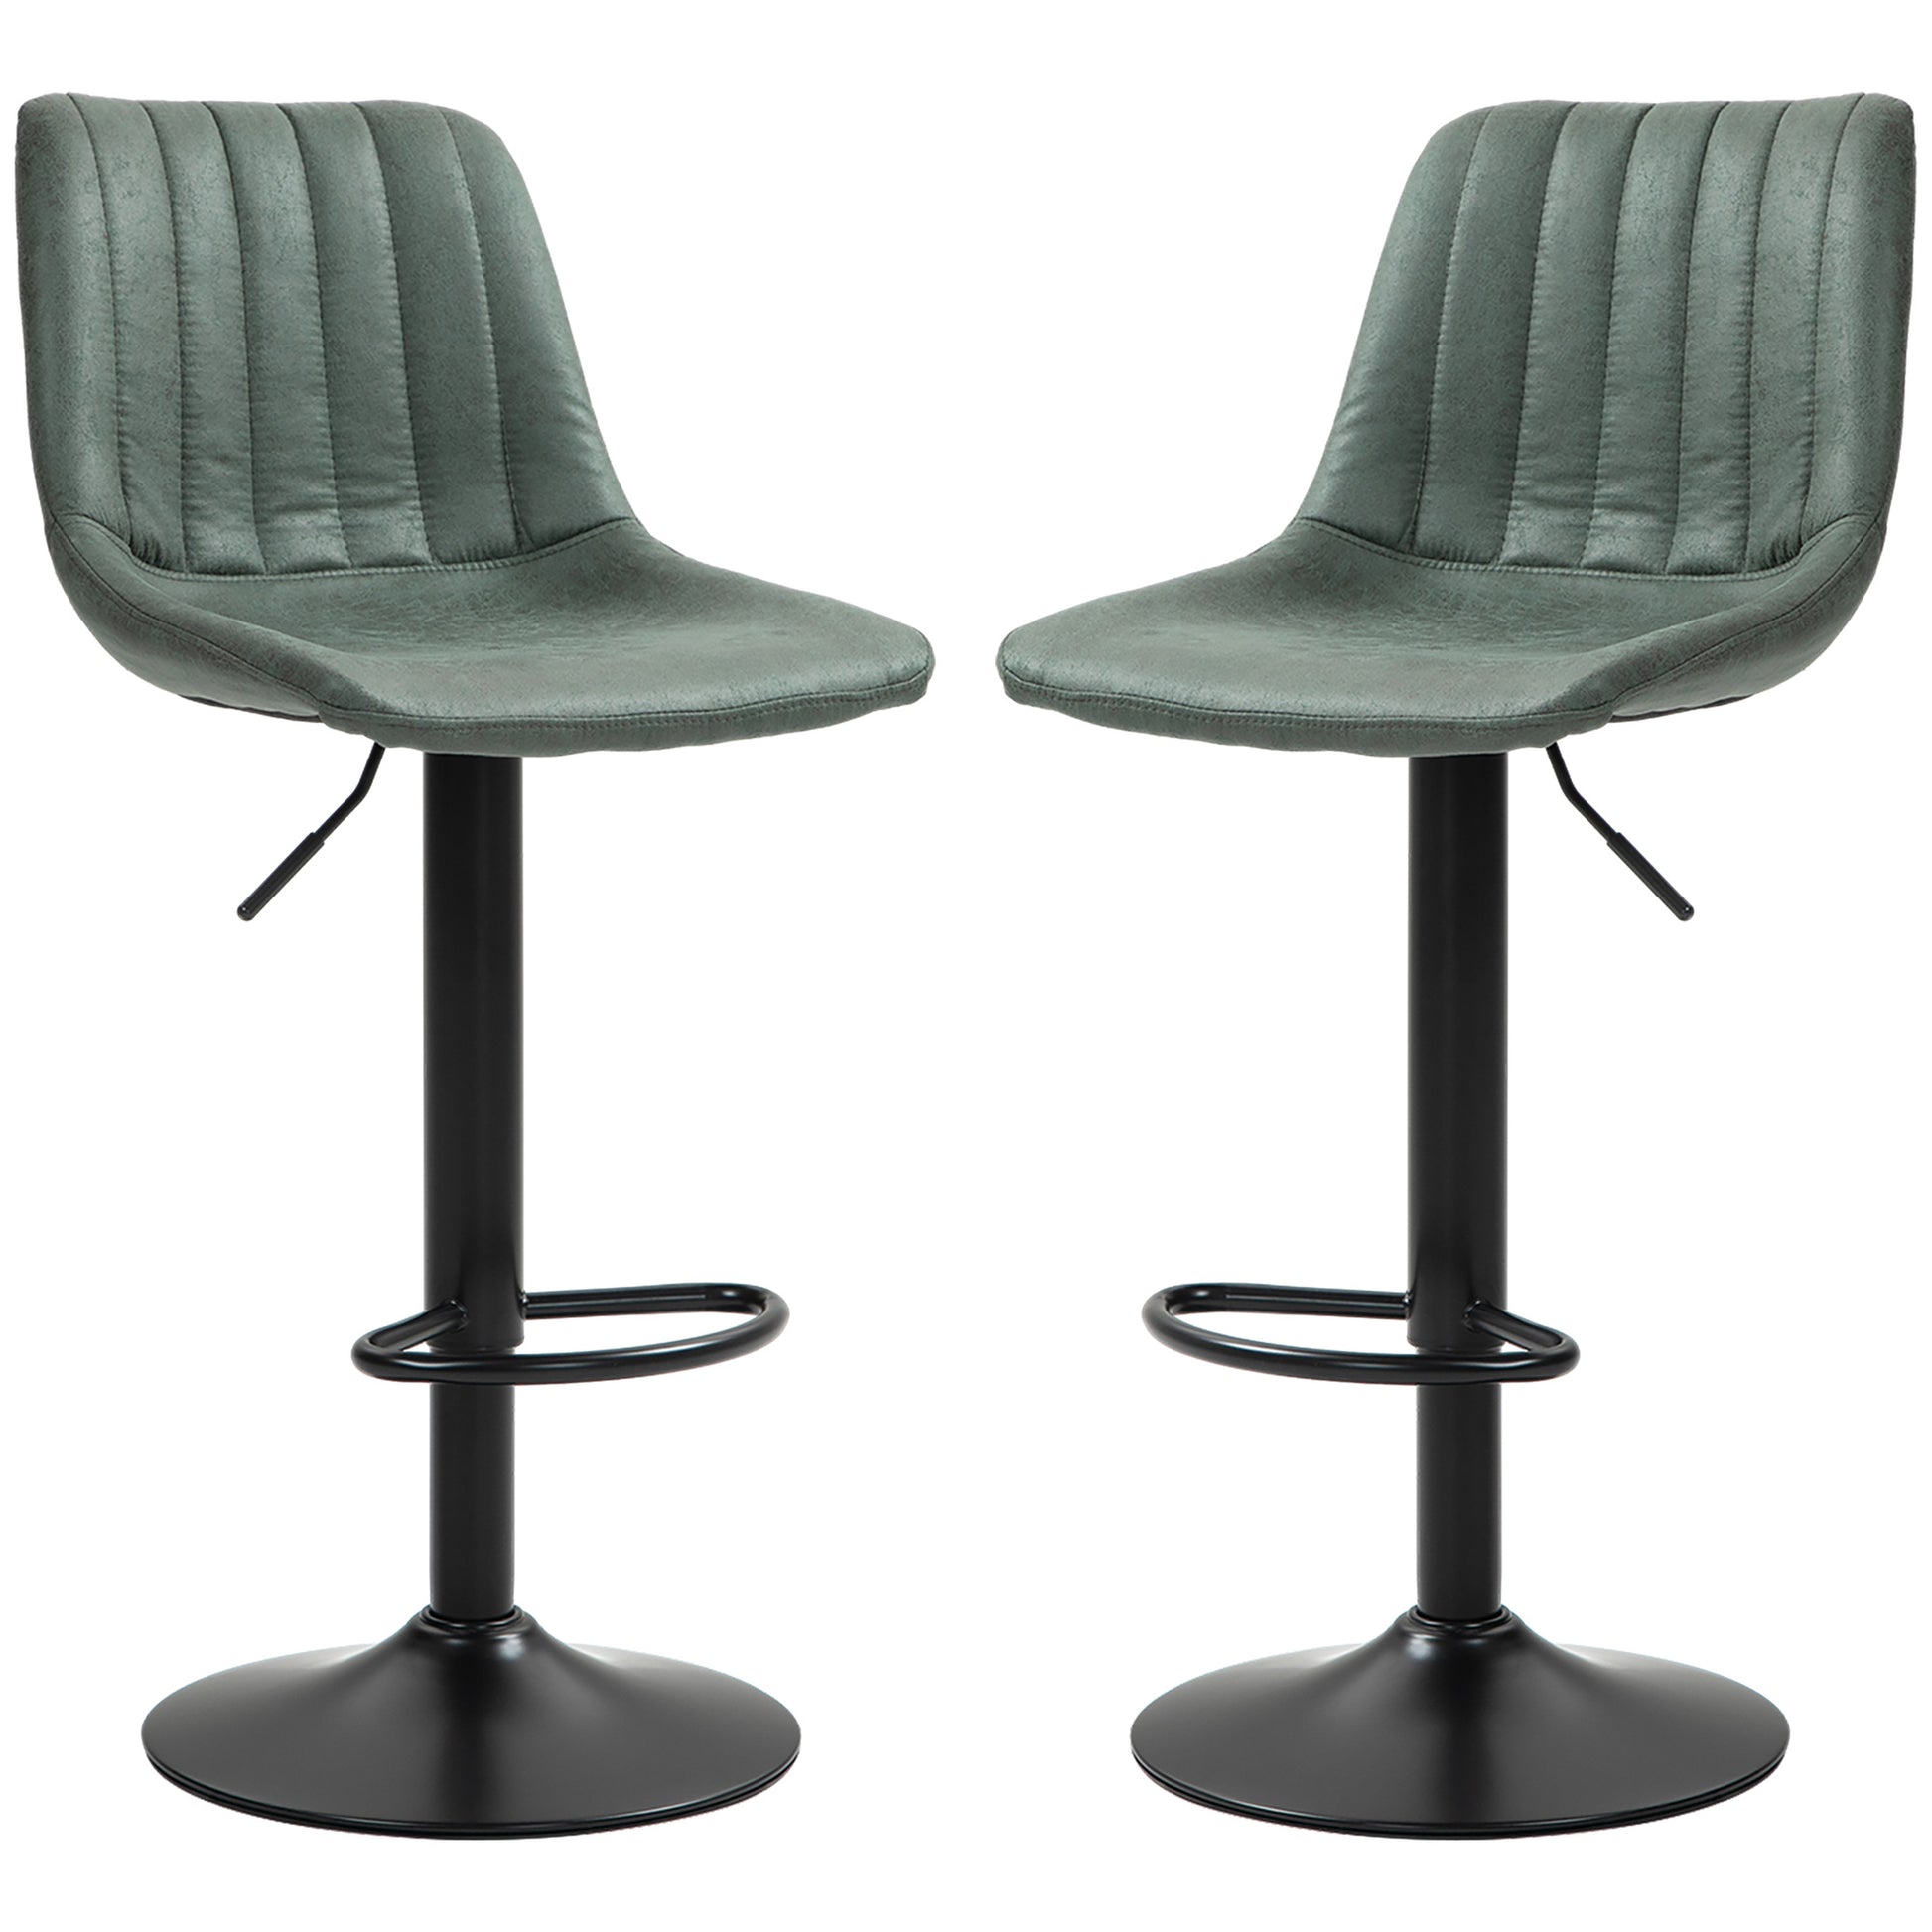 Adjustable Bar Stools Set of 2 Counter Height, Kitchen Bar Stools Dining Chairs 360° Swivel, Green, HOMCOM, 1